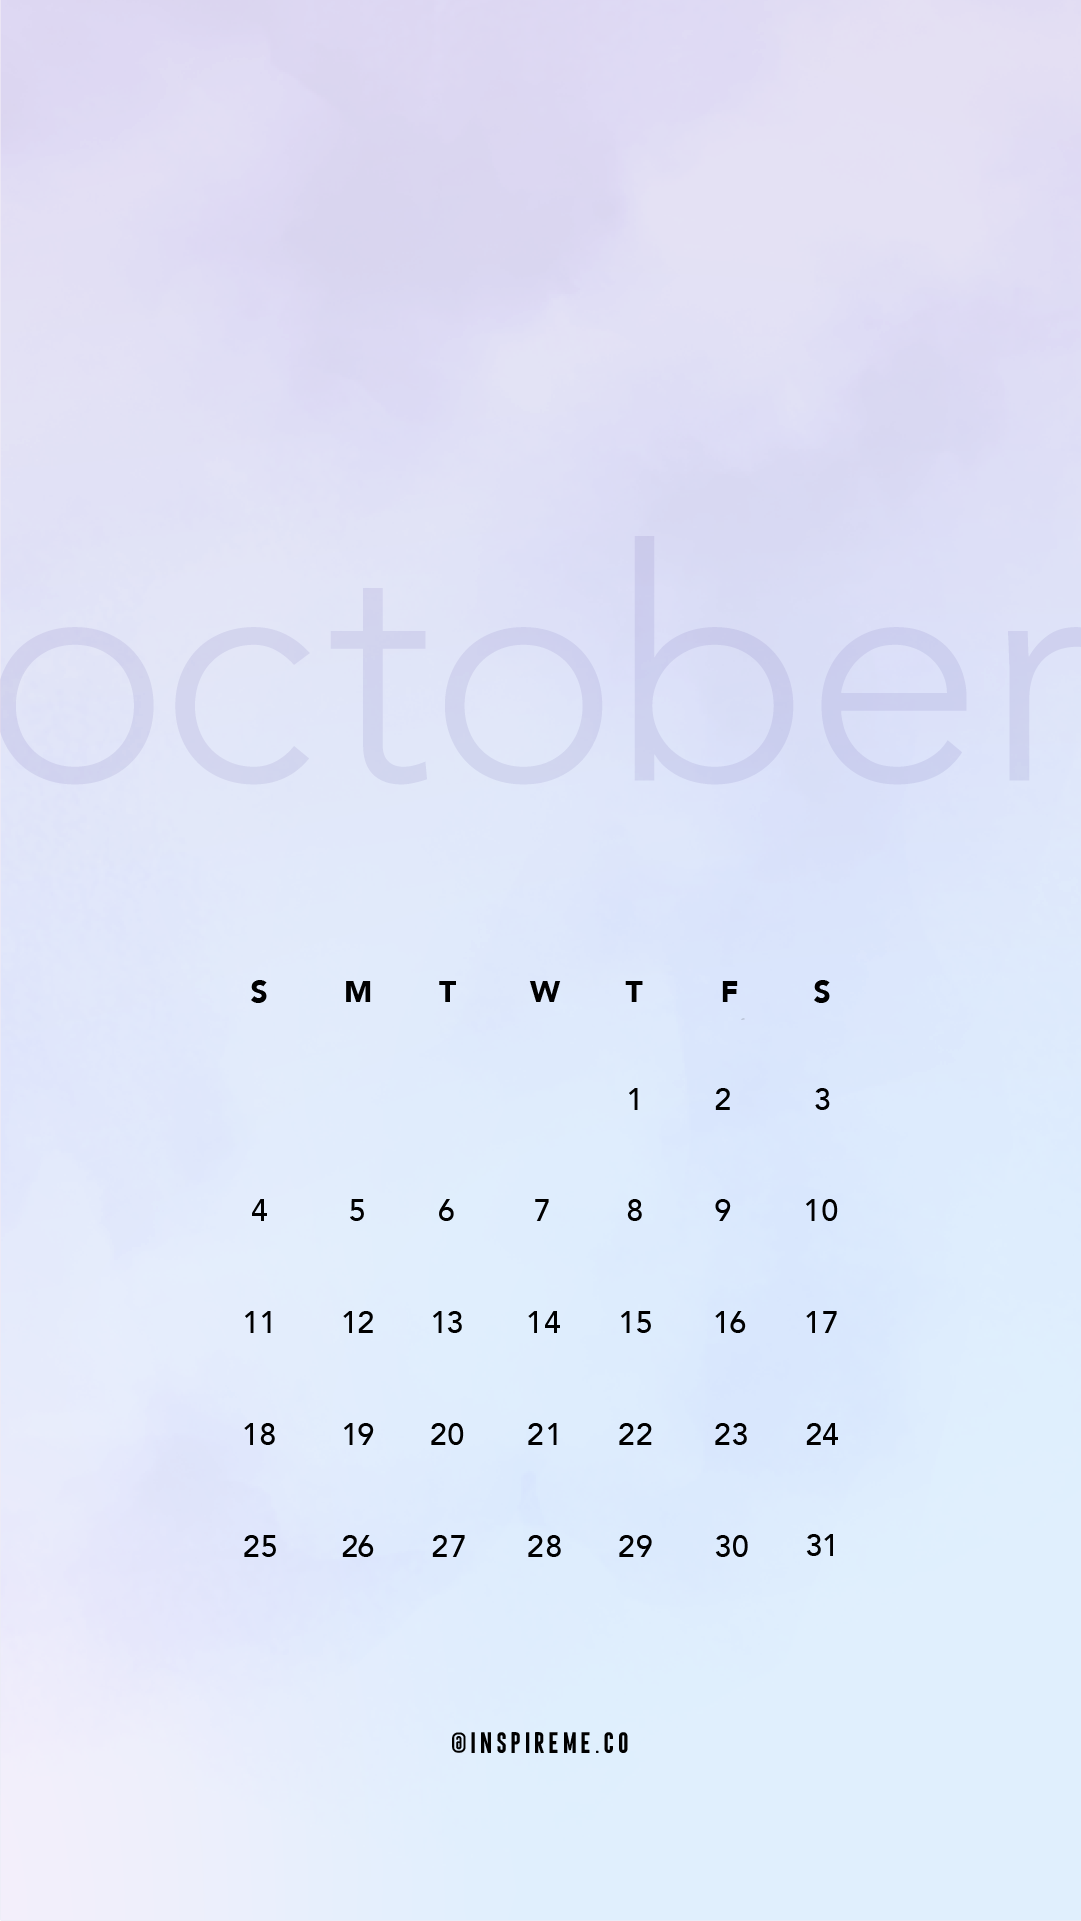 InspireMeCo-Wallpaper-Oct20_iPhone2